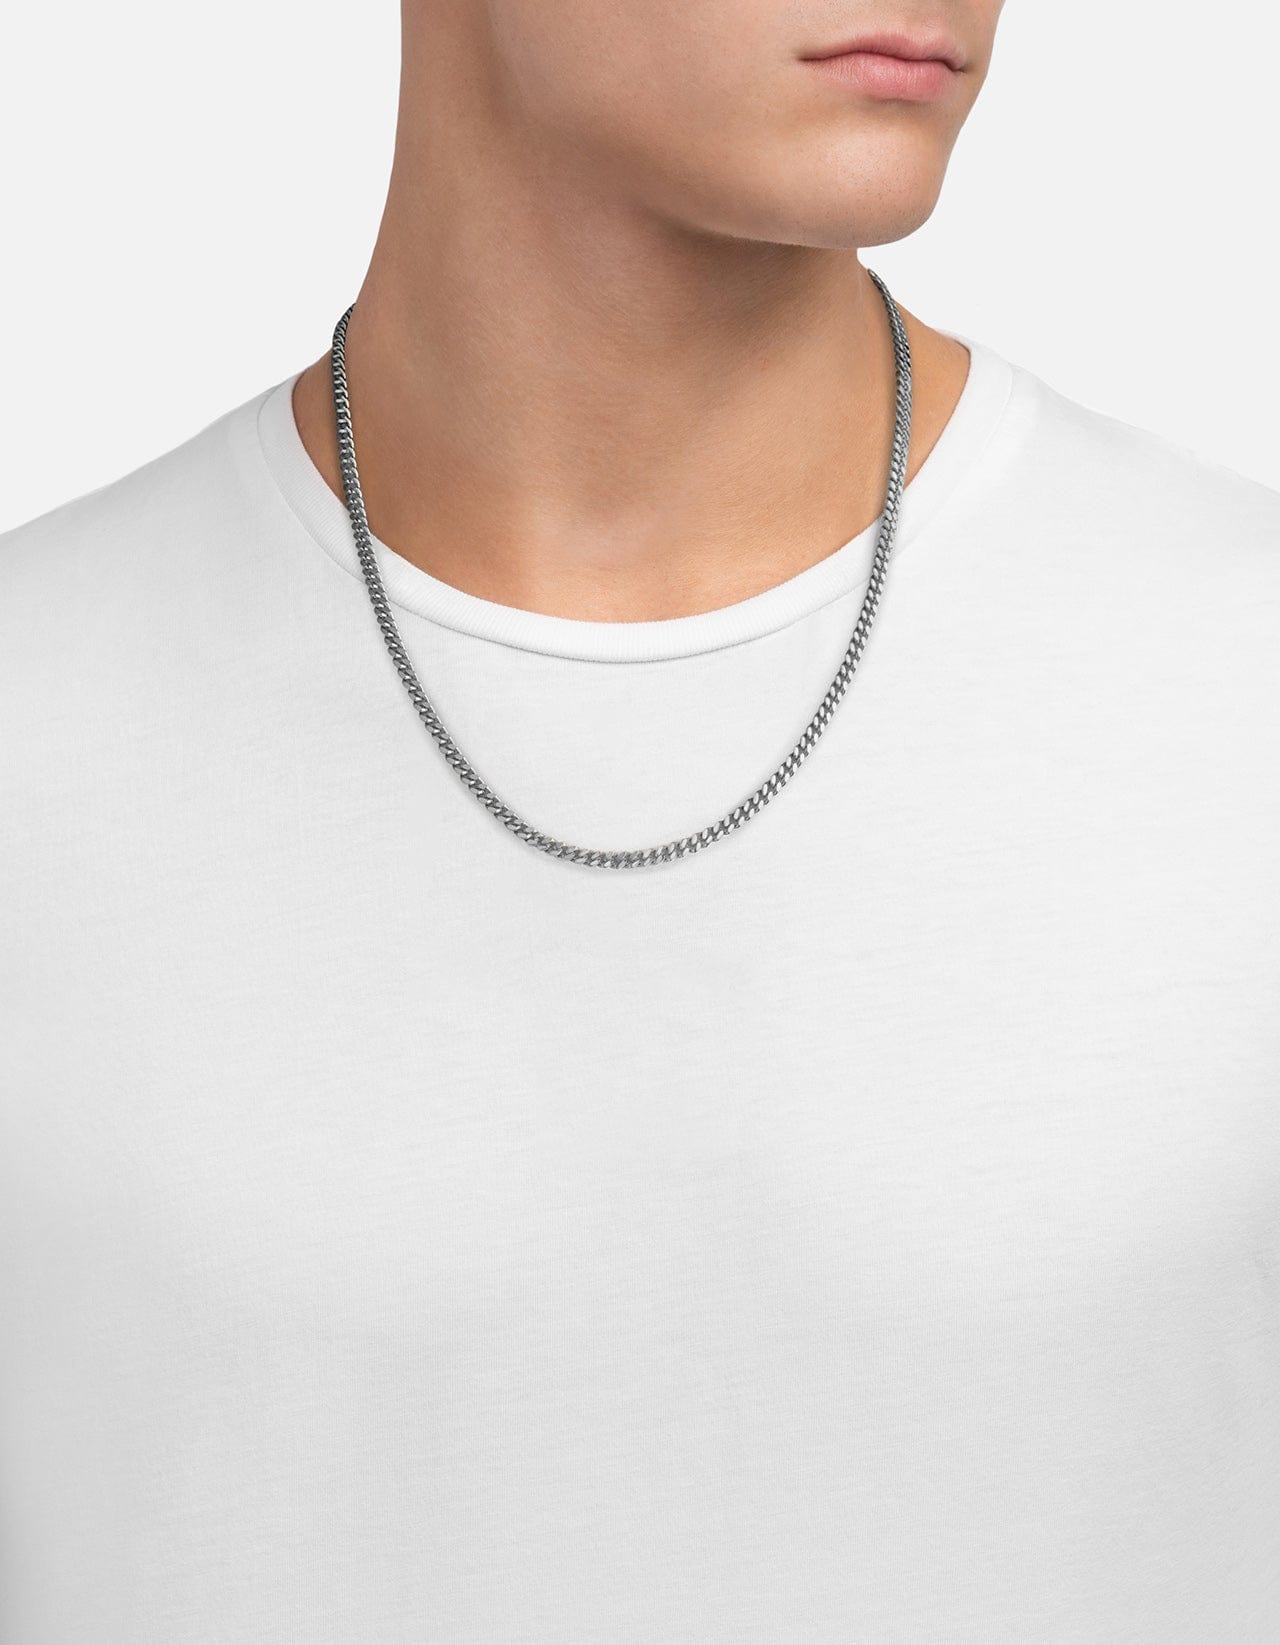 Miansai Men's 4mm Cuban Chain Necklace, Sterling Silver, Size 22 in.